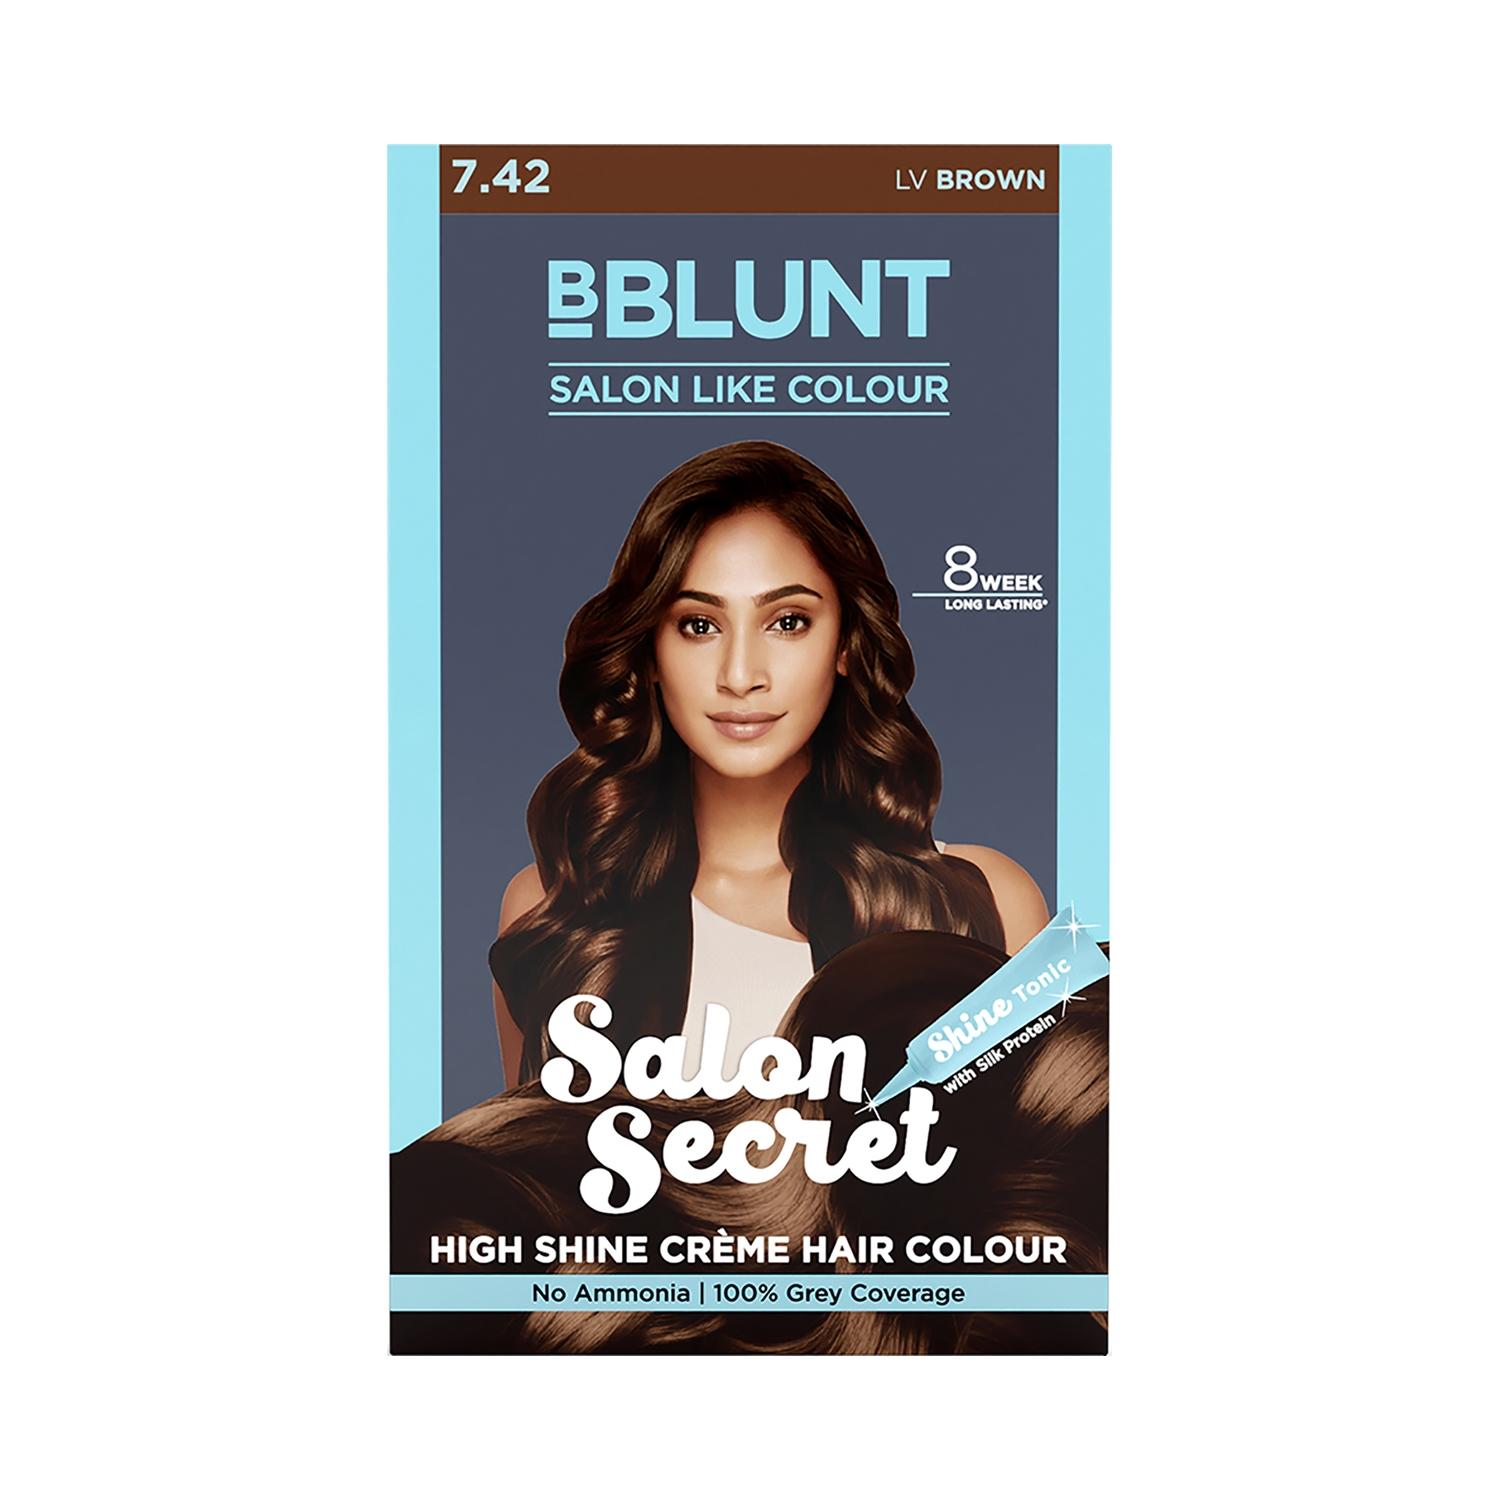 bblunt salon secret high shine creme hair color - 7.42 lv brown (108ml)